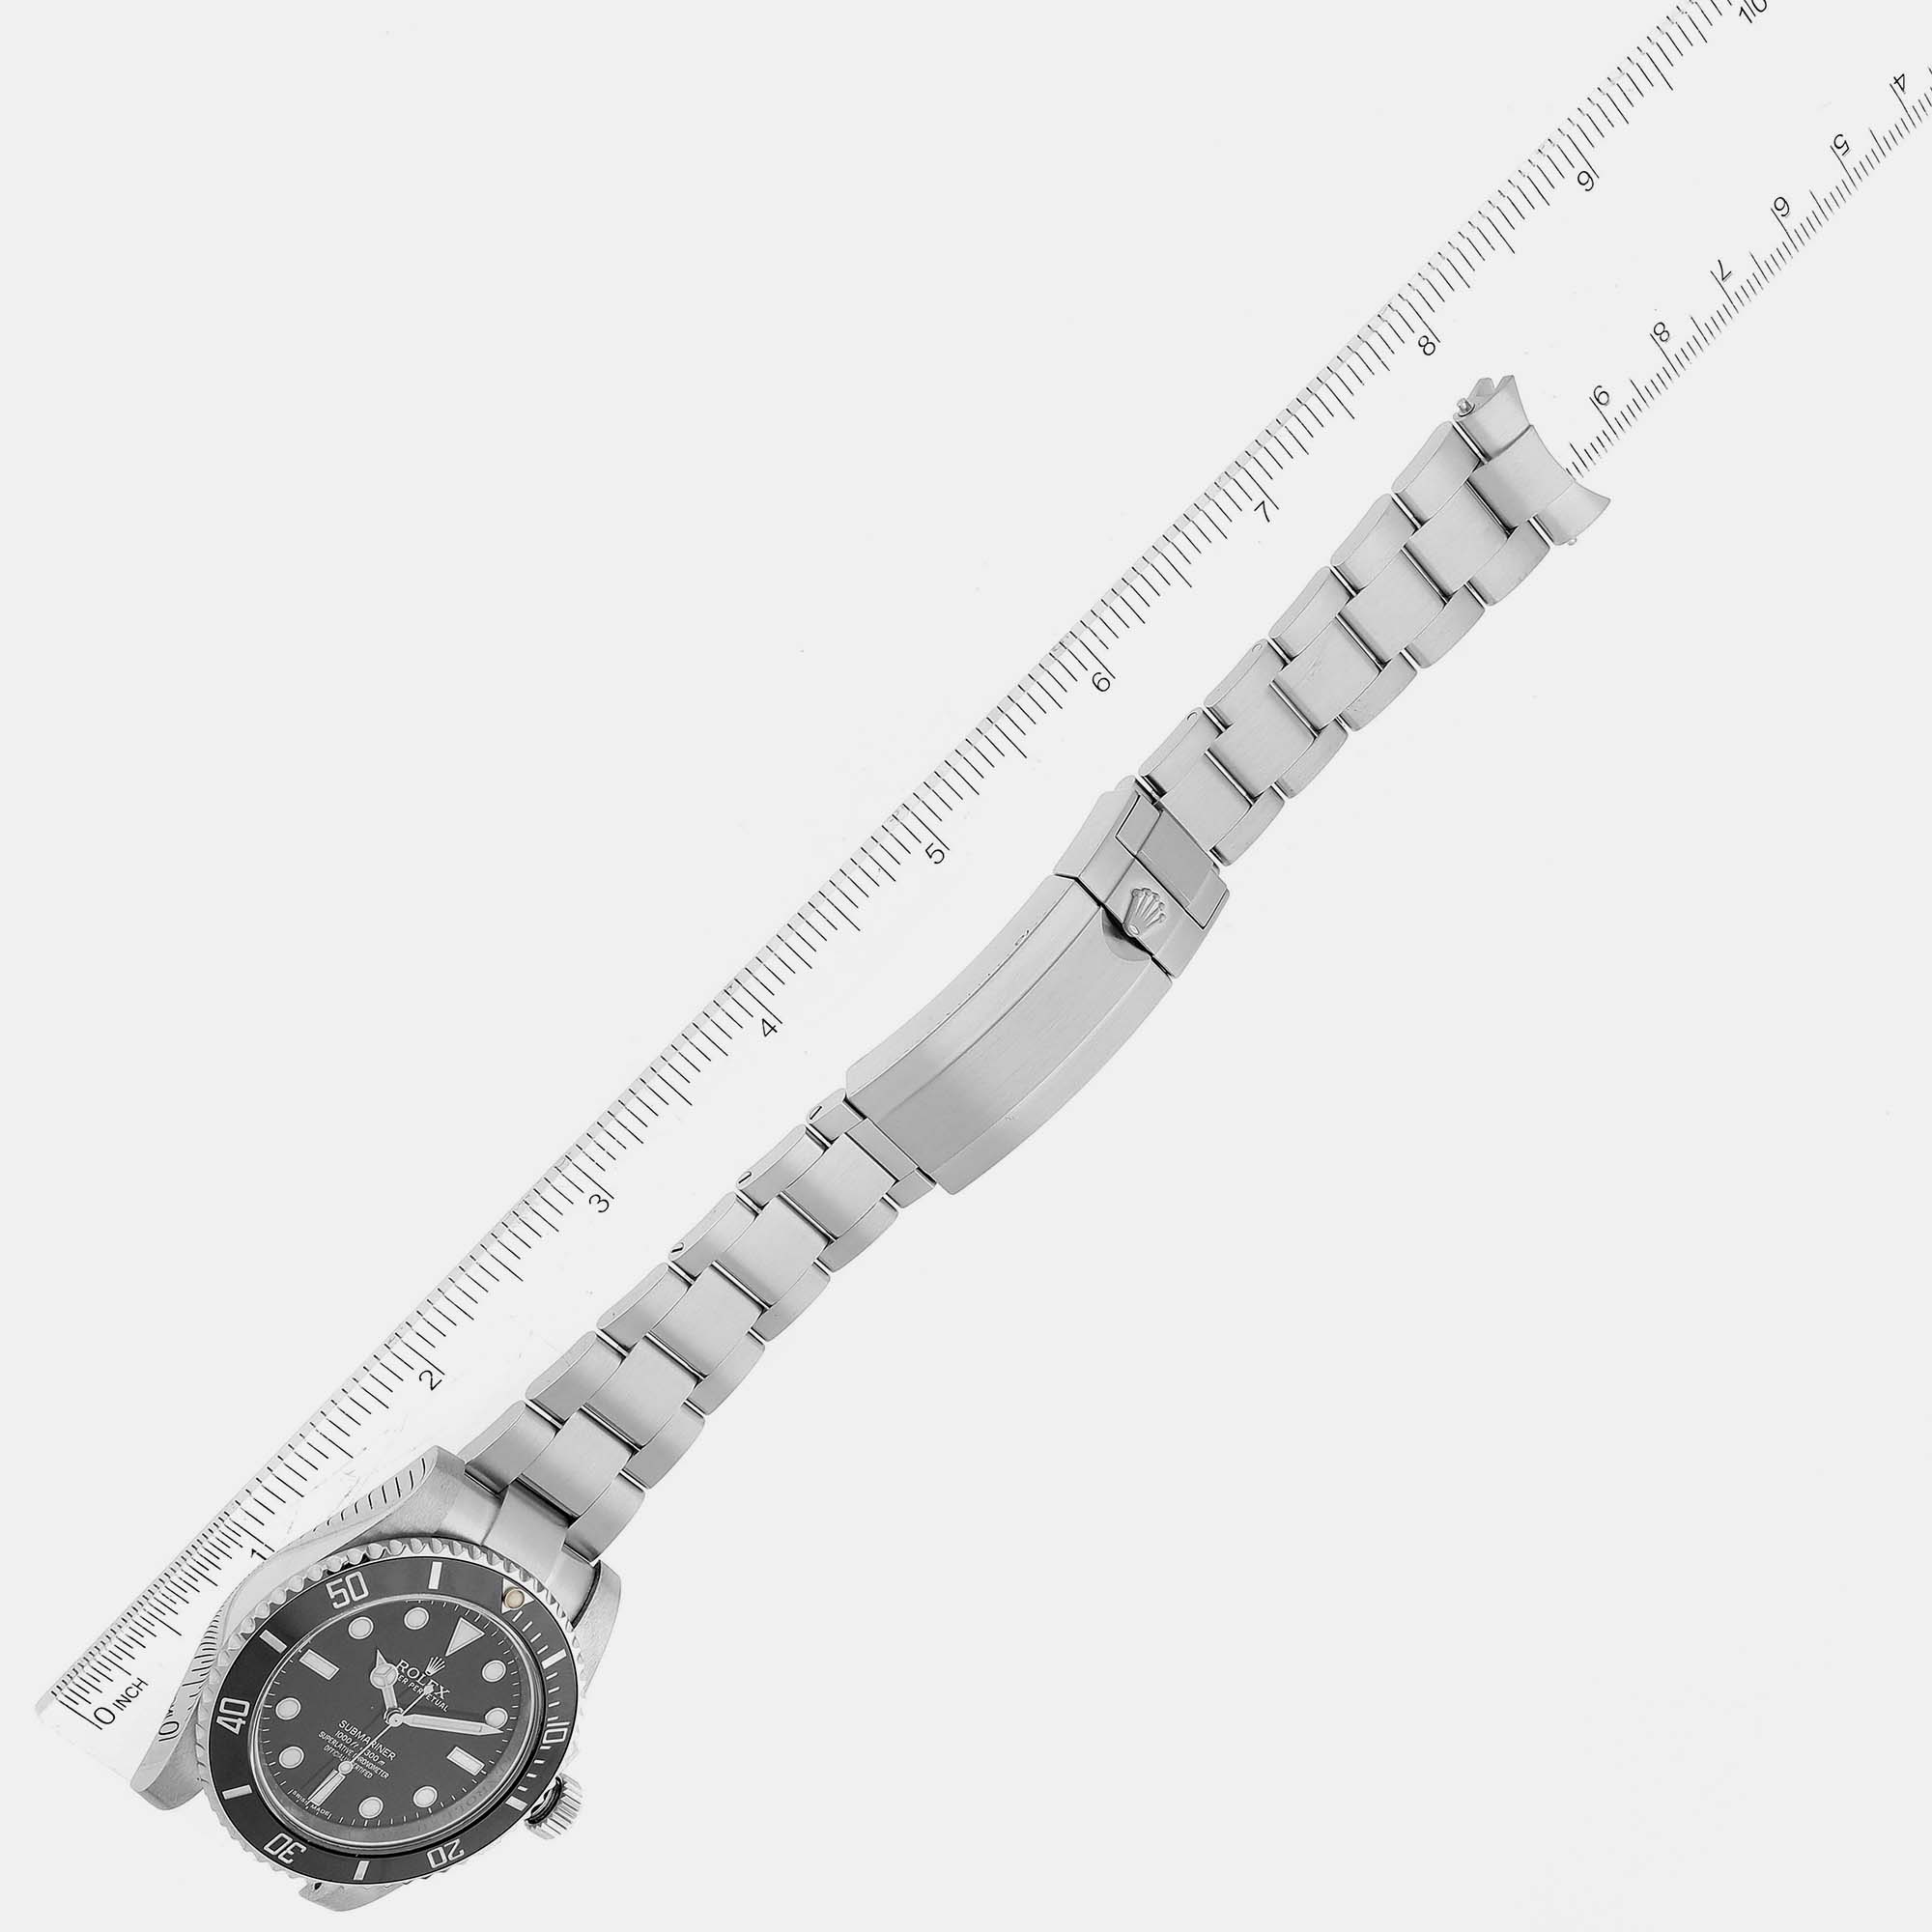 Rolex Submariner Black Dial Ceramic Bezel Steel Men's Watch 114060 40 Mm